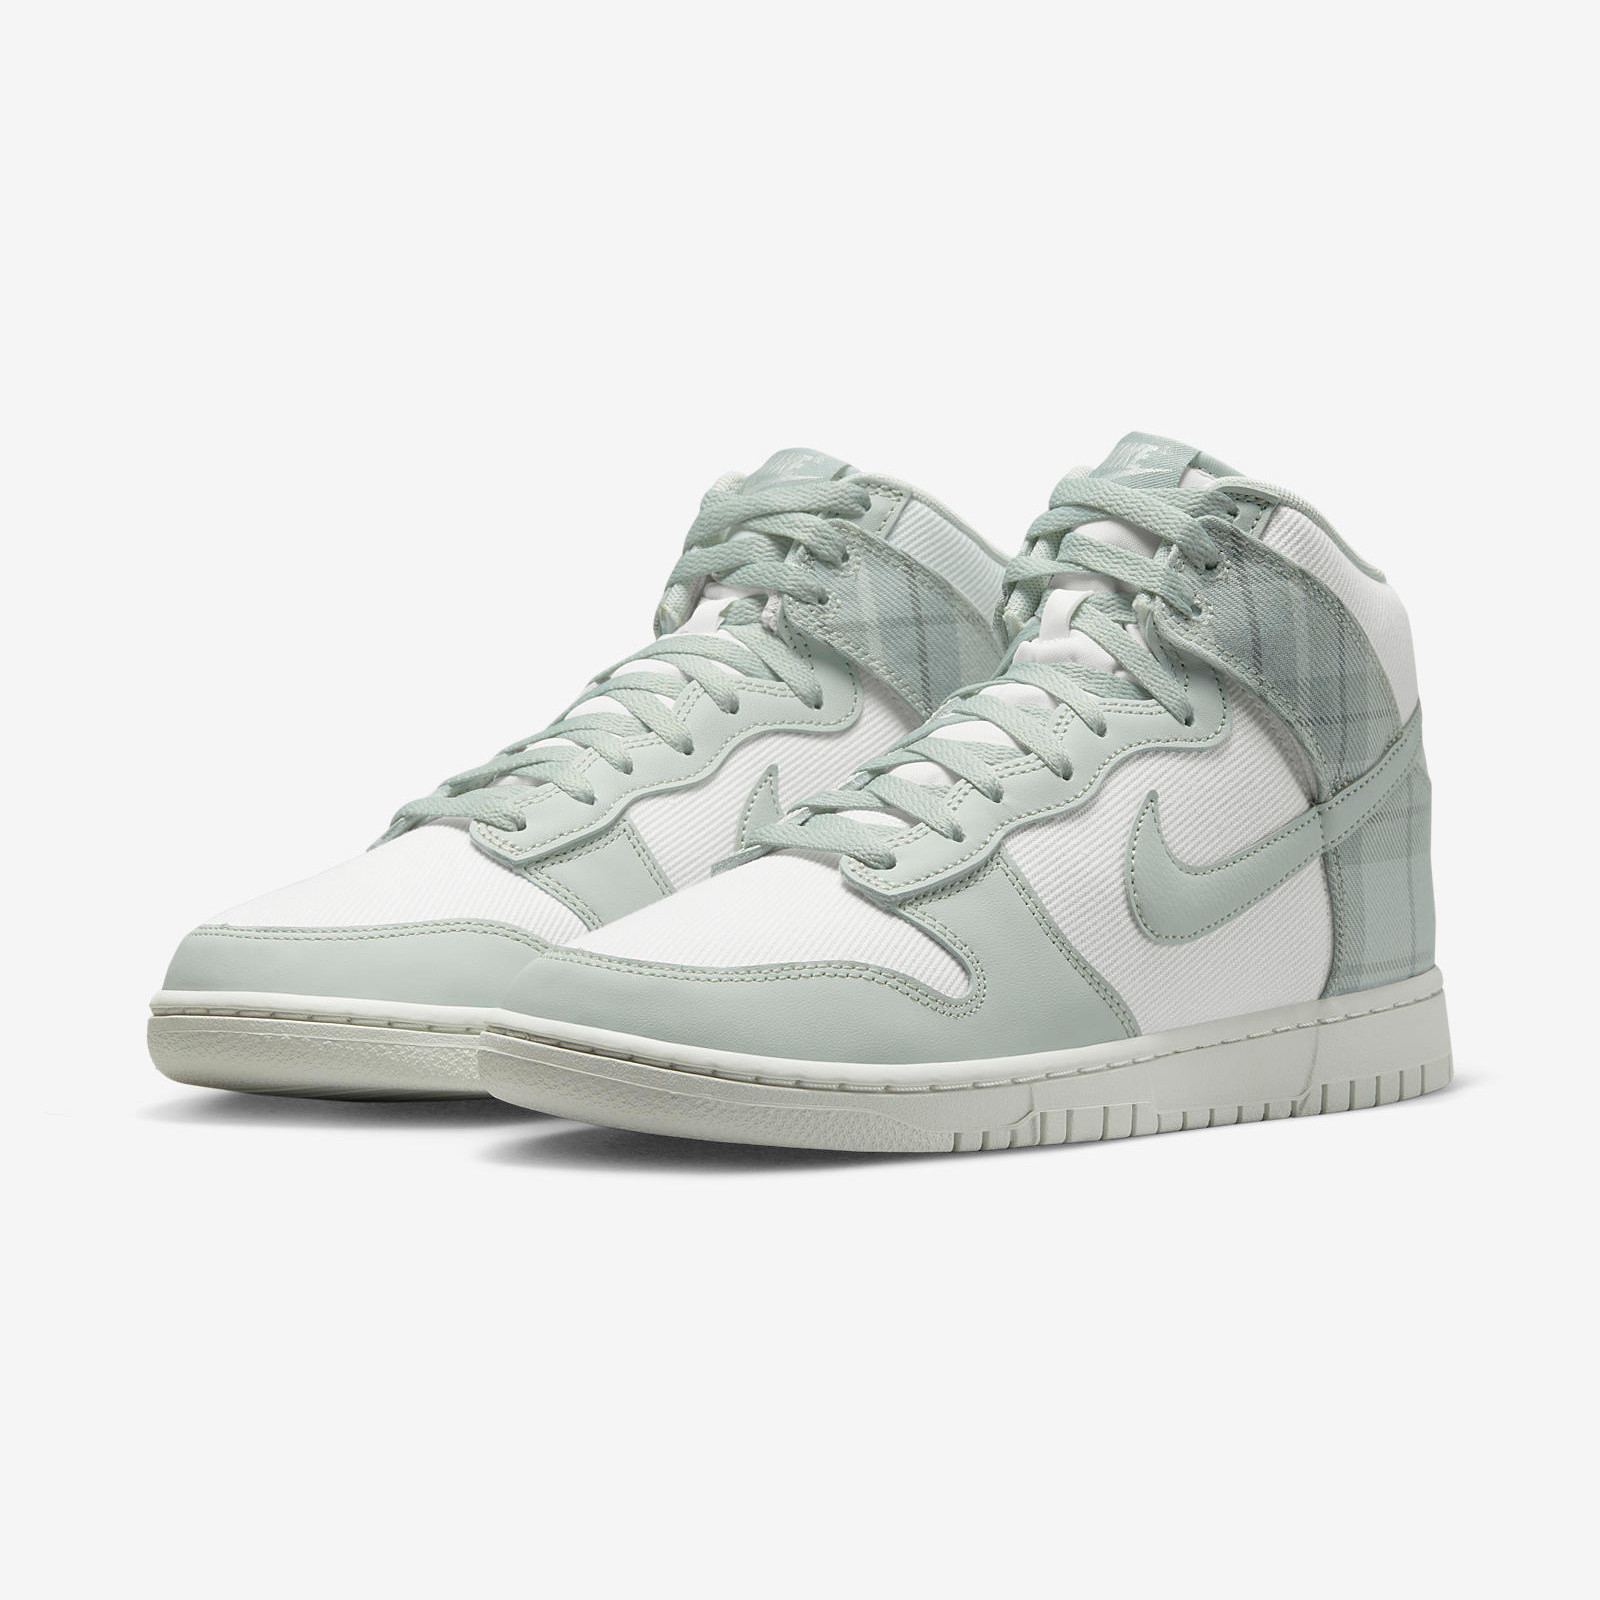 Nike Dunk High Plaid
White / Light Green